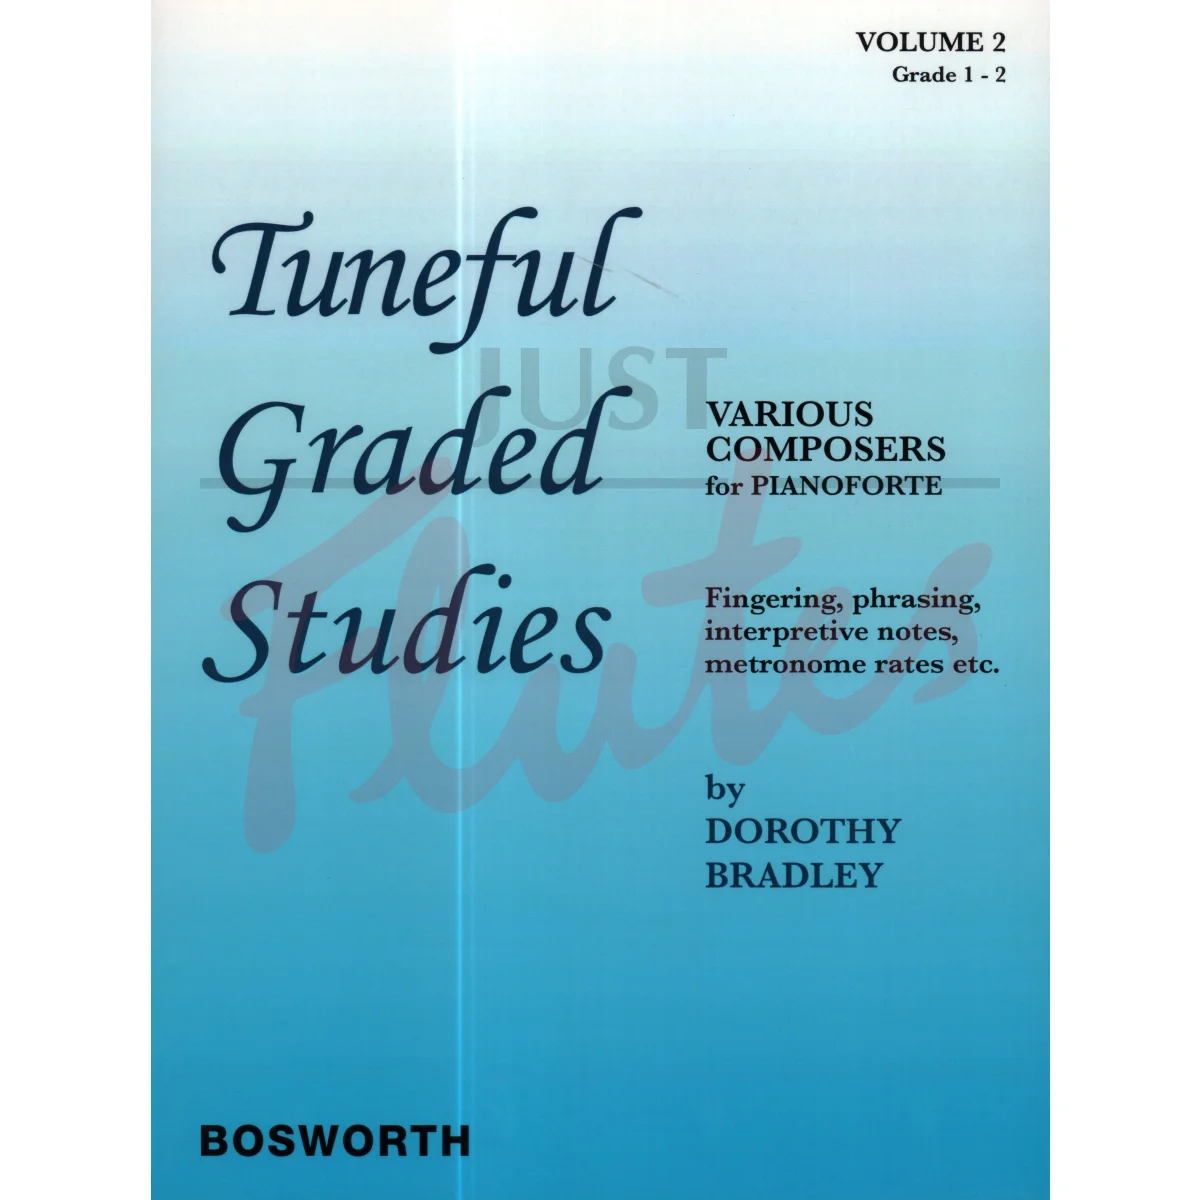 Tuneful Graded Studies Vol 2